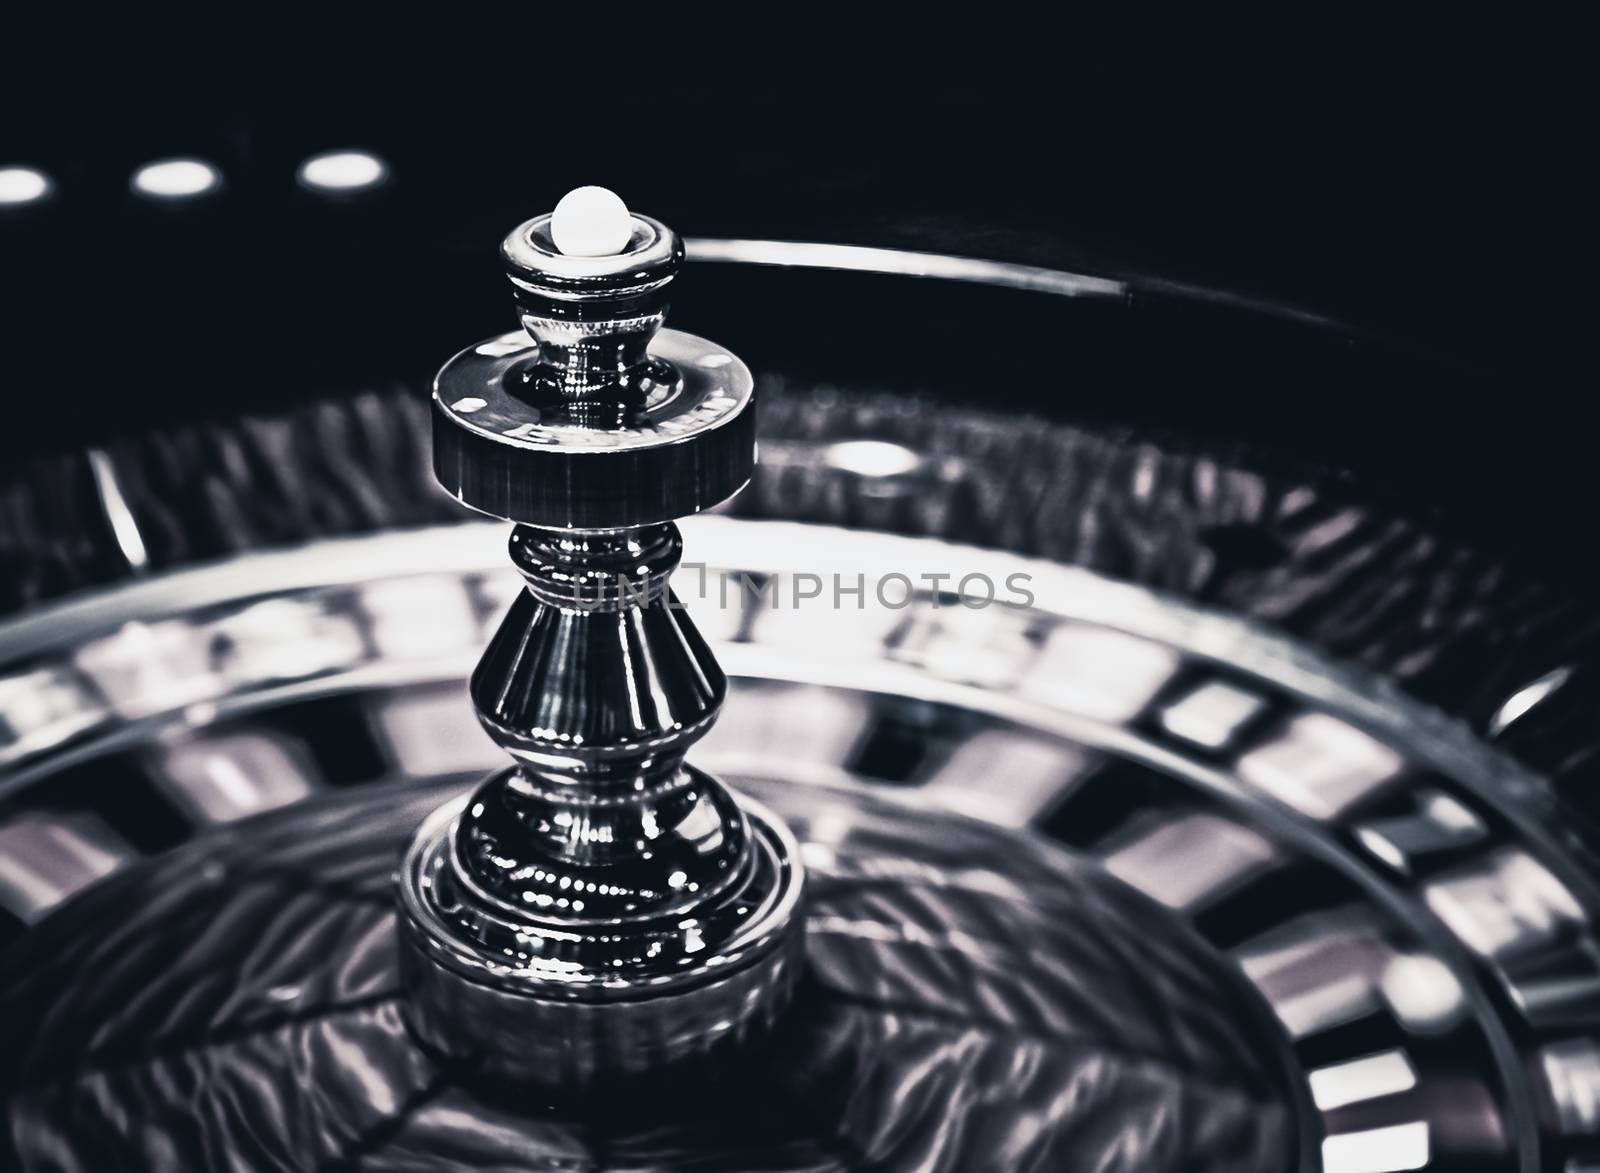 Roulette wheel in casino, gambling ad by Anneleven